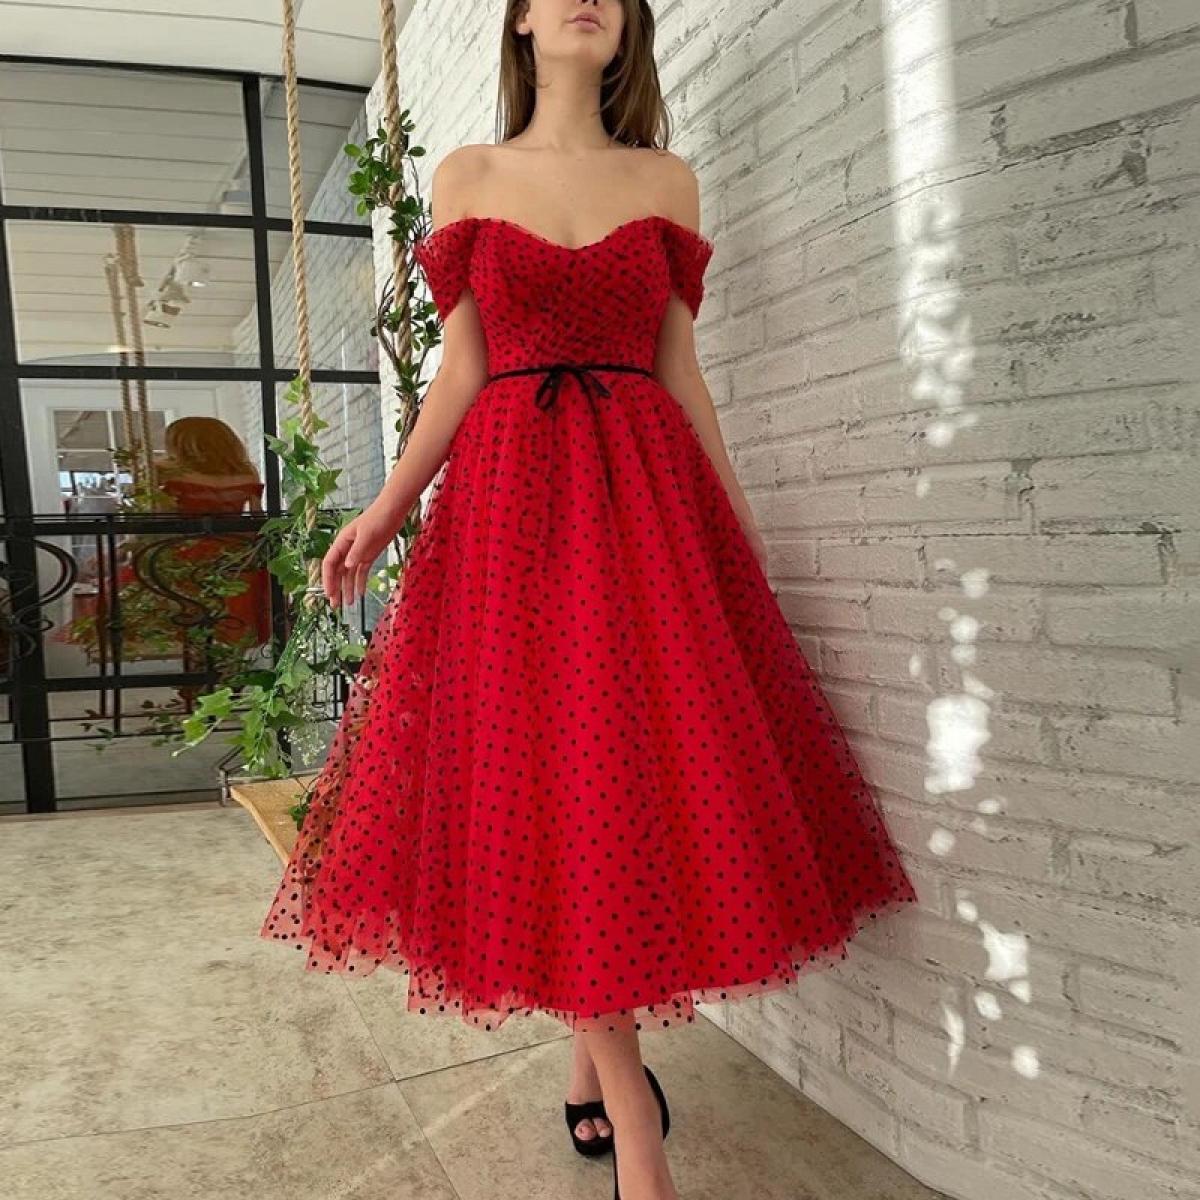 https://d3en8d2cl9etnr.cloudfront.net/1581041-large_default/formal-dresses-for-women-party-wedding-evening-luxury-dress-elegant-go.jpg